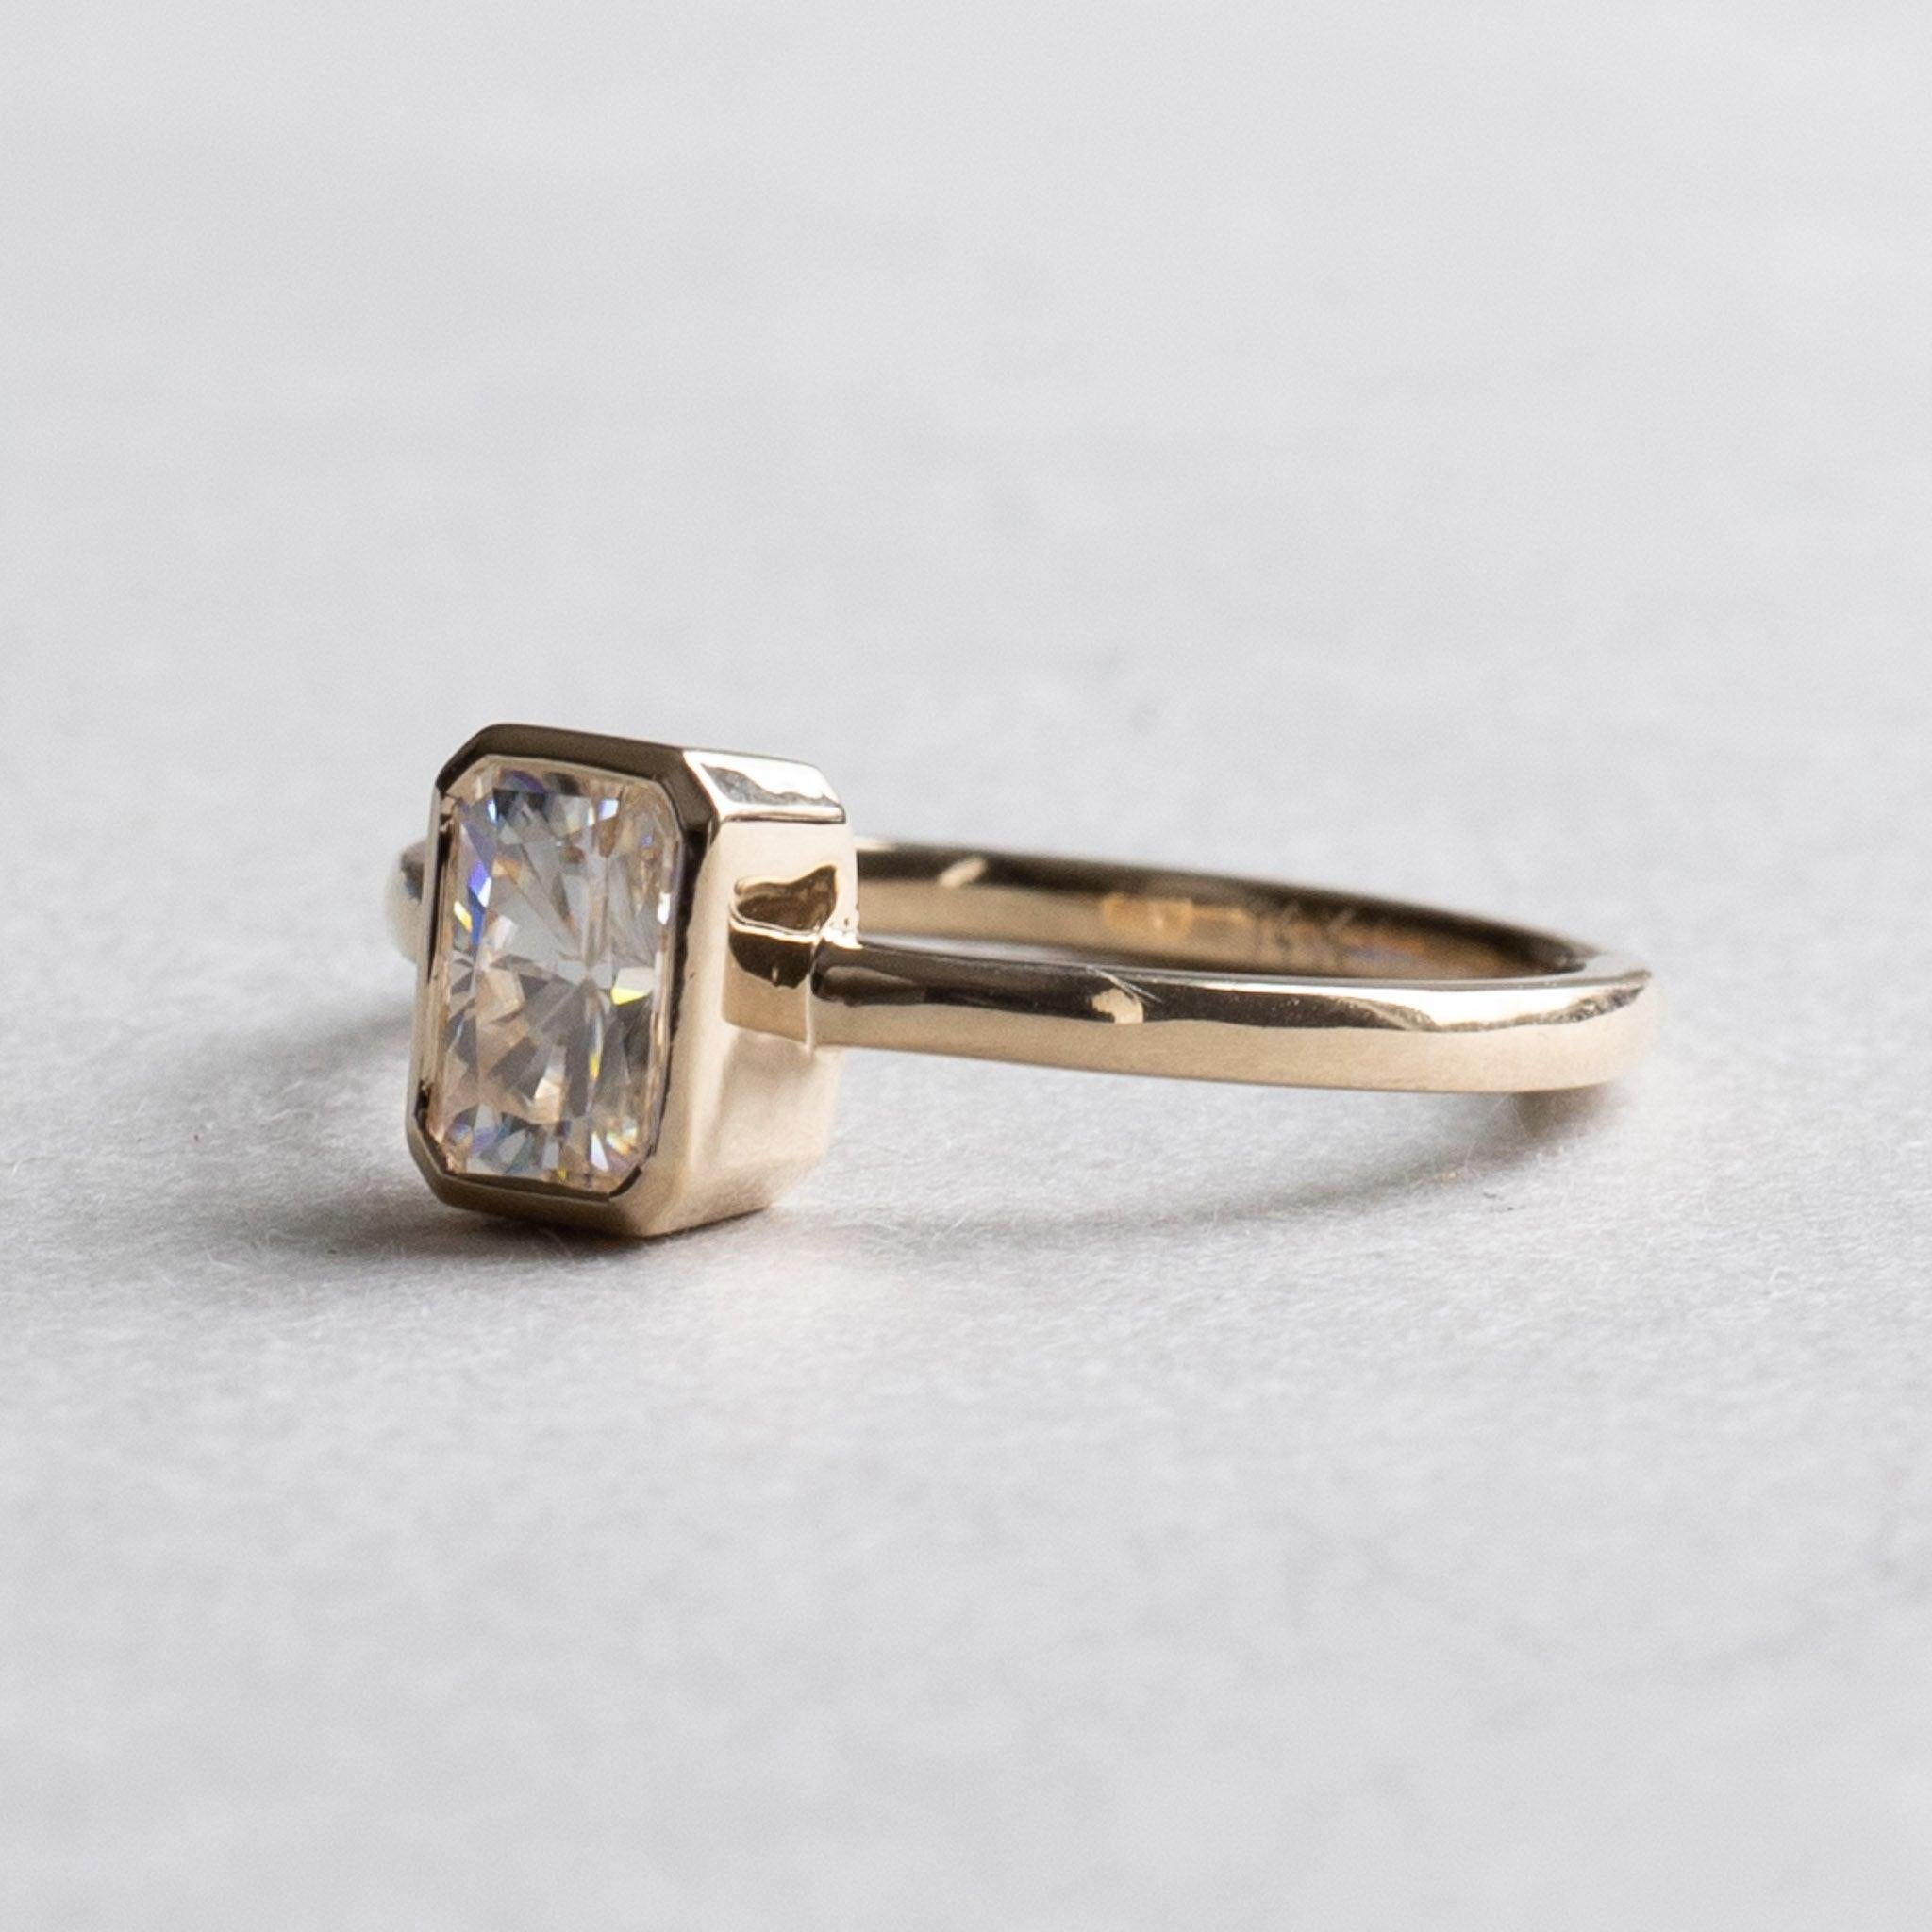 For Sale:  1 Carat Radiant Emerald Cut Diamond Ring 18k Gold 5